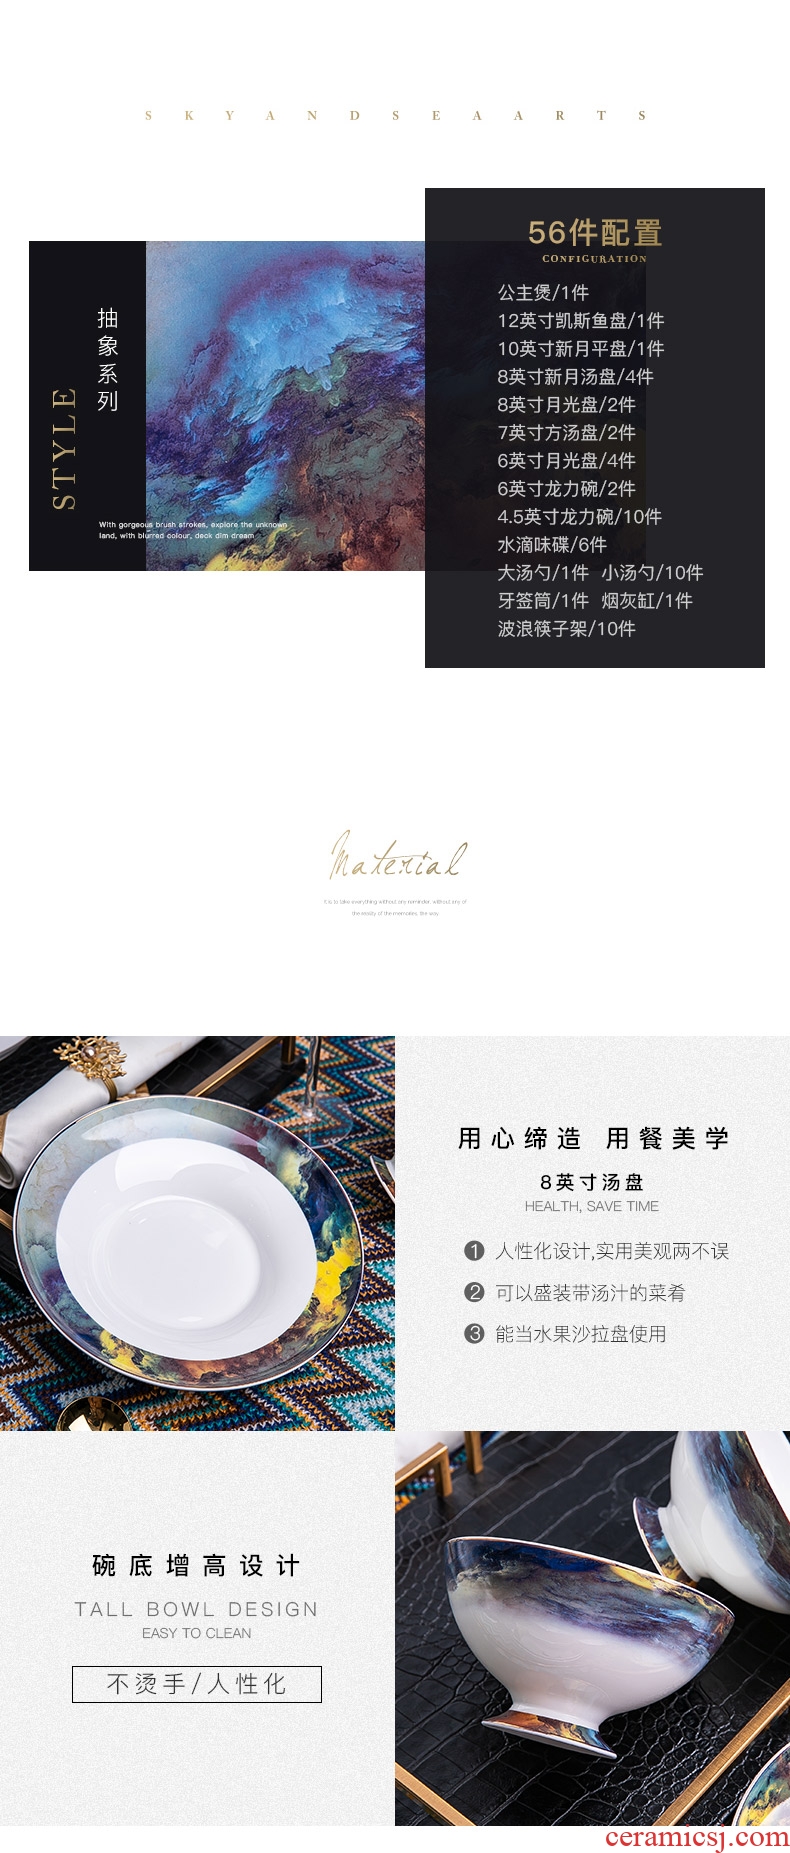 Cutlery set bowl dish home European contracted jingdezhen ceramic bowls of high-grade luxury bone disc set combination